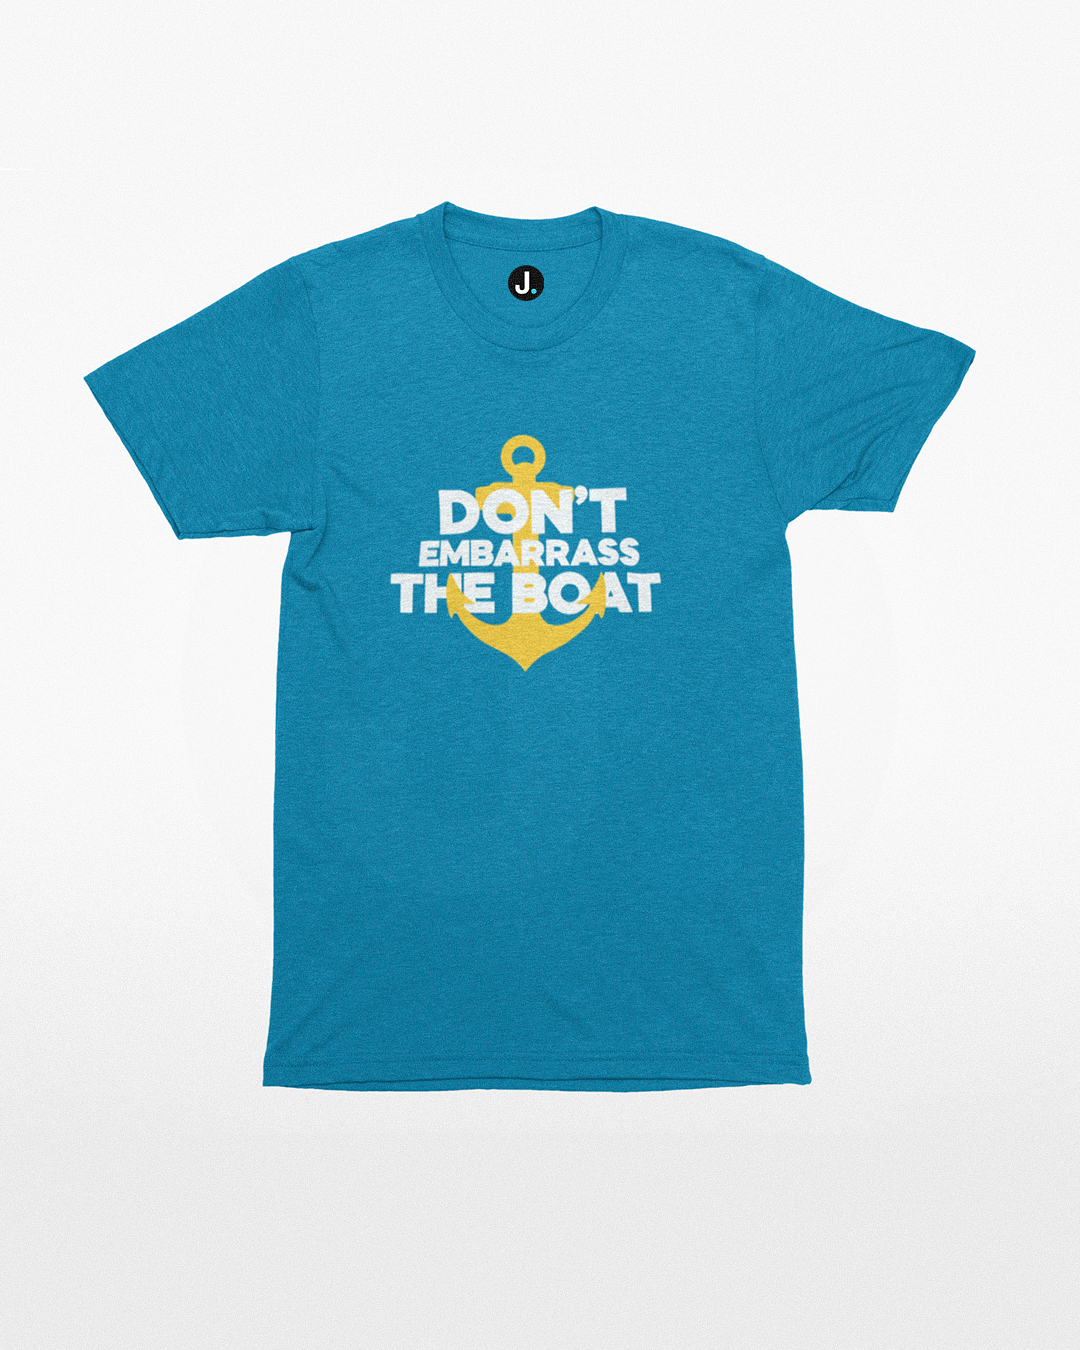 Don't Embarrass The Boat T-Shirt - Captain Below Deck Inspired T-Shirt - Don't Embarrass The Boat T-Shirt